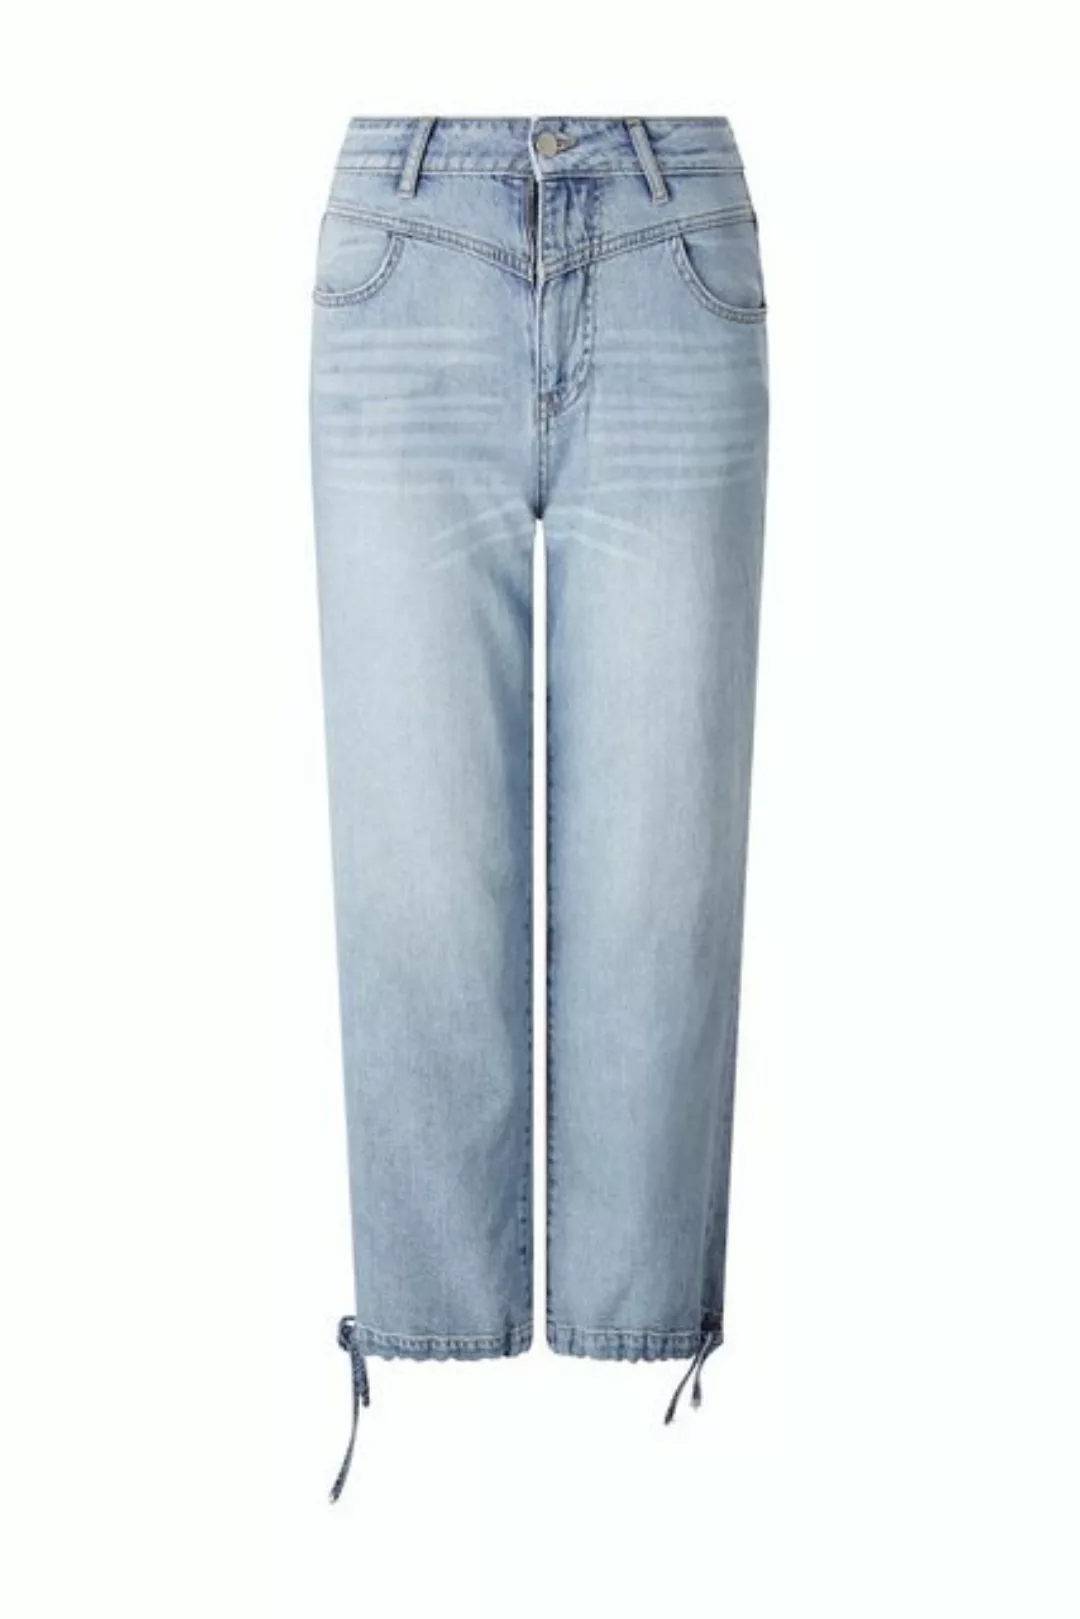 Rich & Royal 5-Pocket-Jeans slouchy light blue d günstig online kaufen